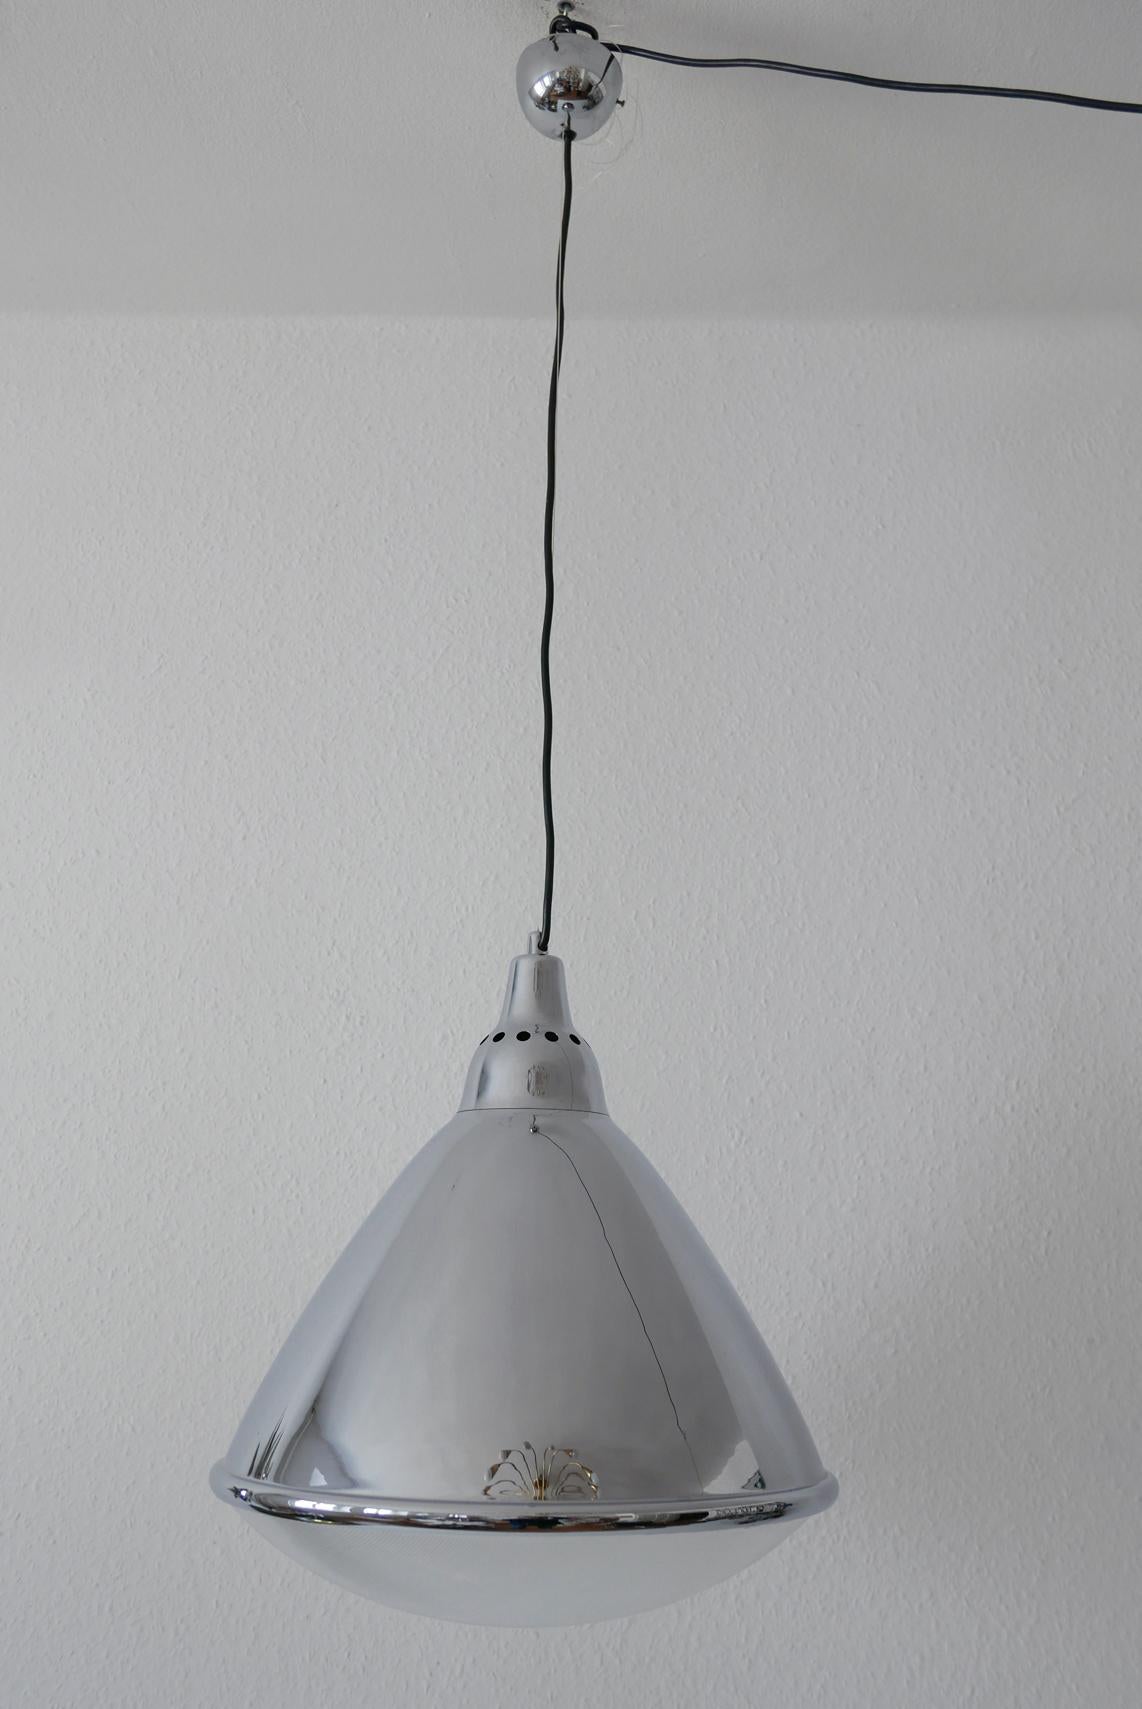 Metal Midcentury 'Headlight' Pendant Lamp by Ingo Maurer for Design M, 1968, Germany